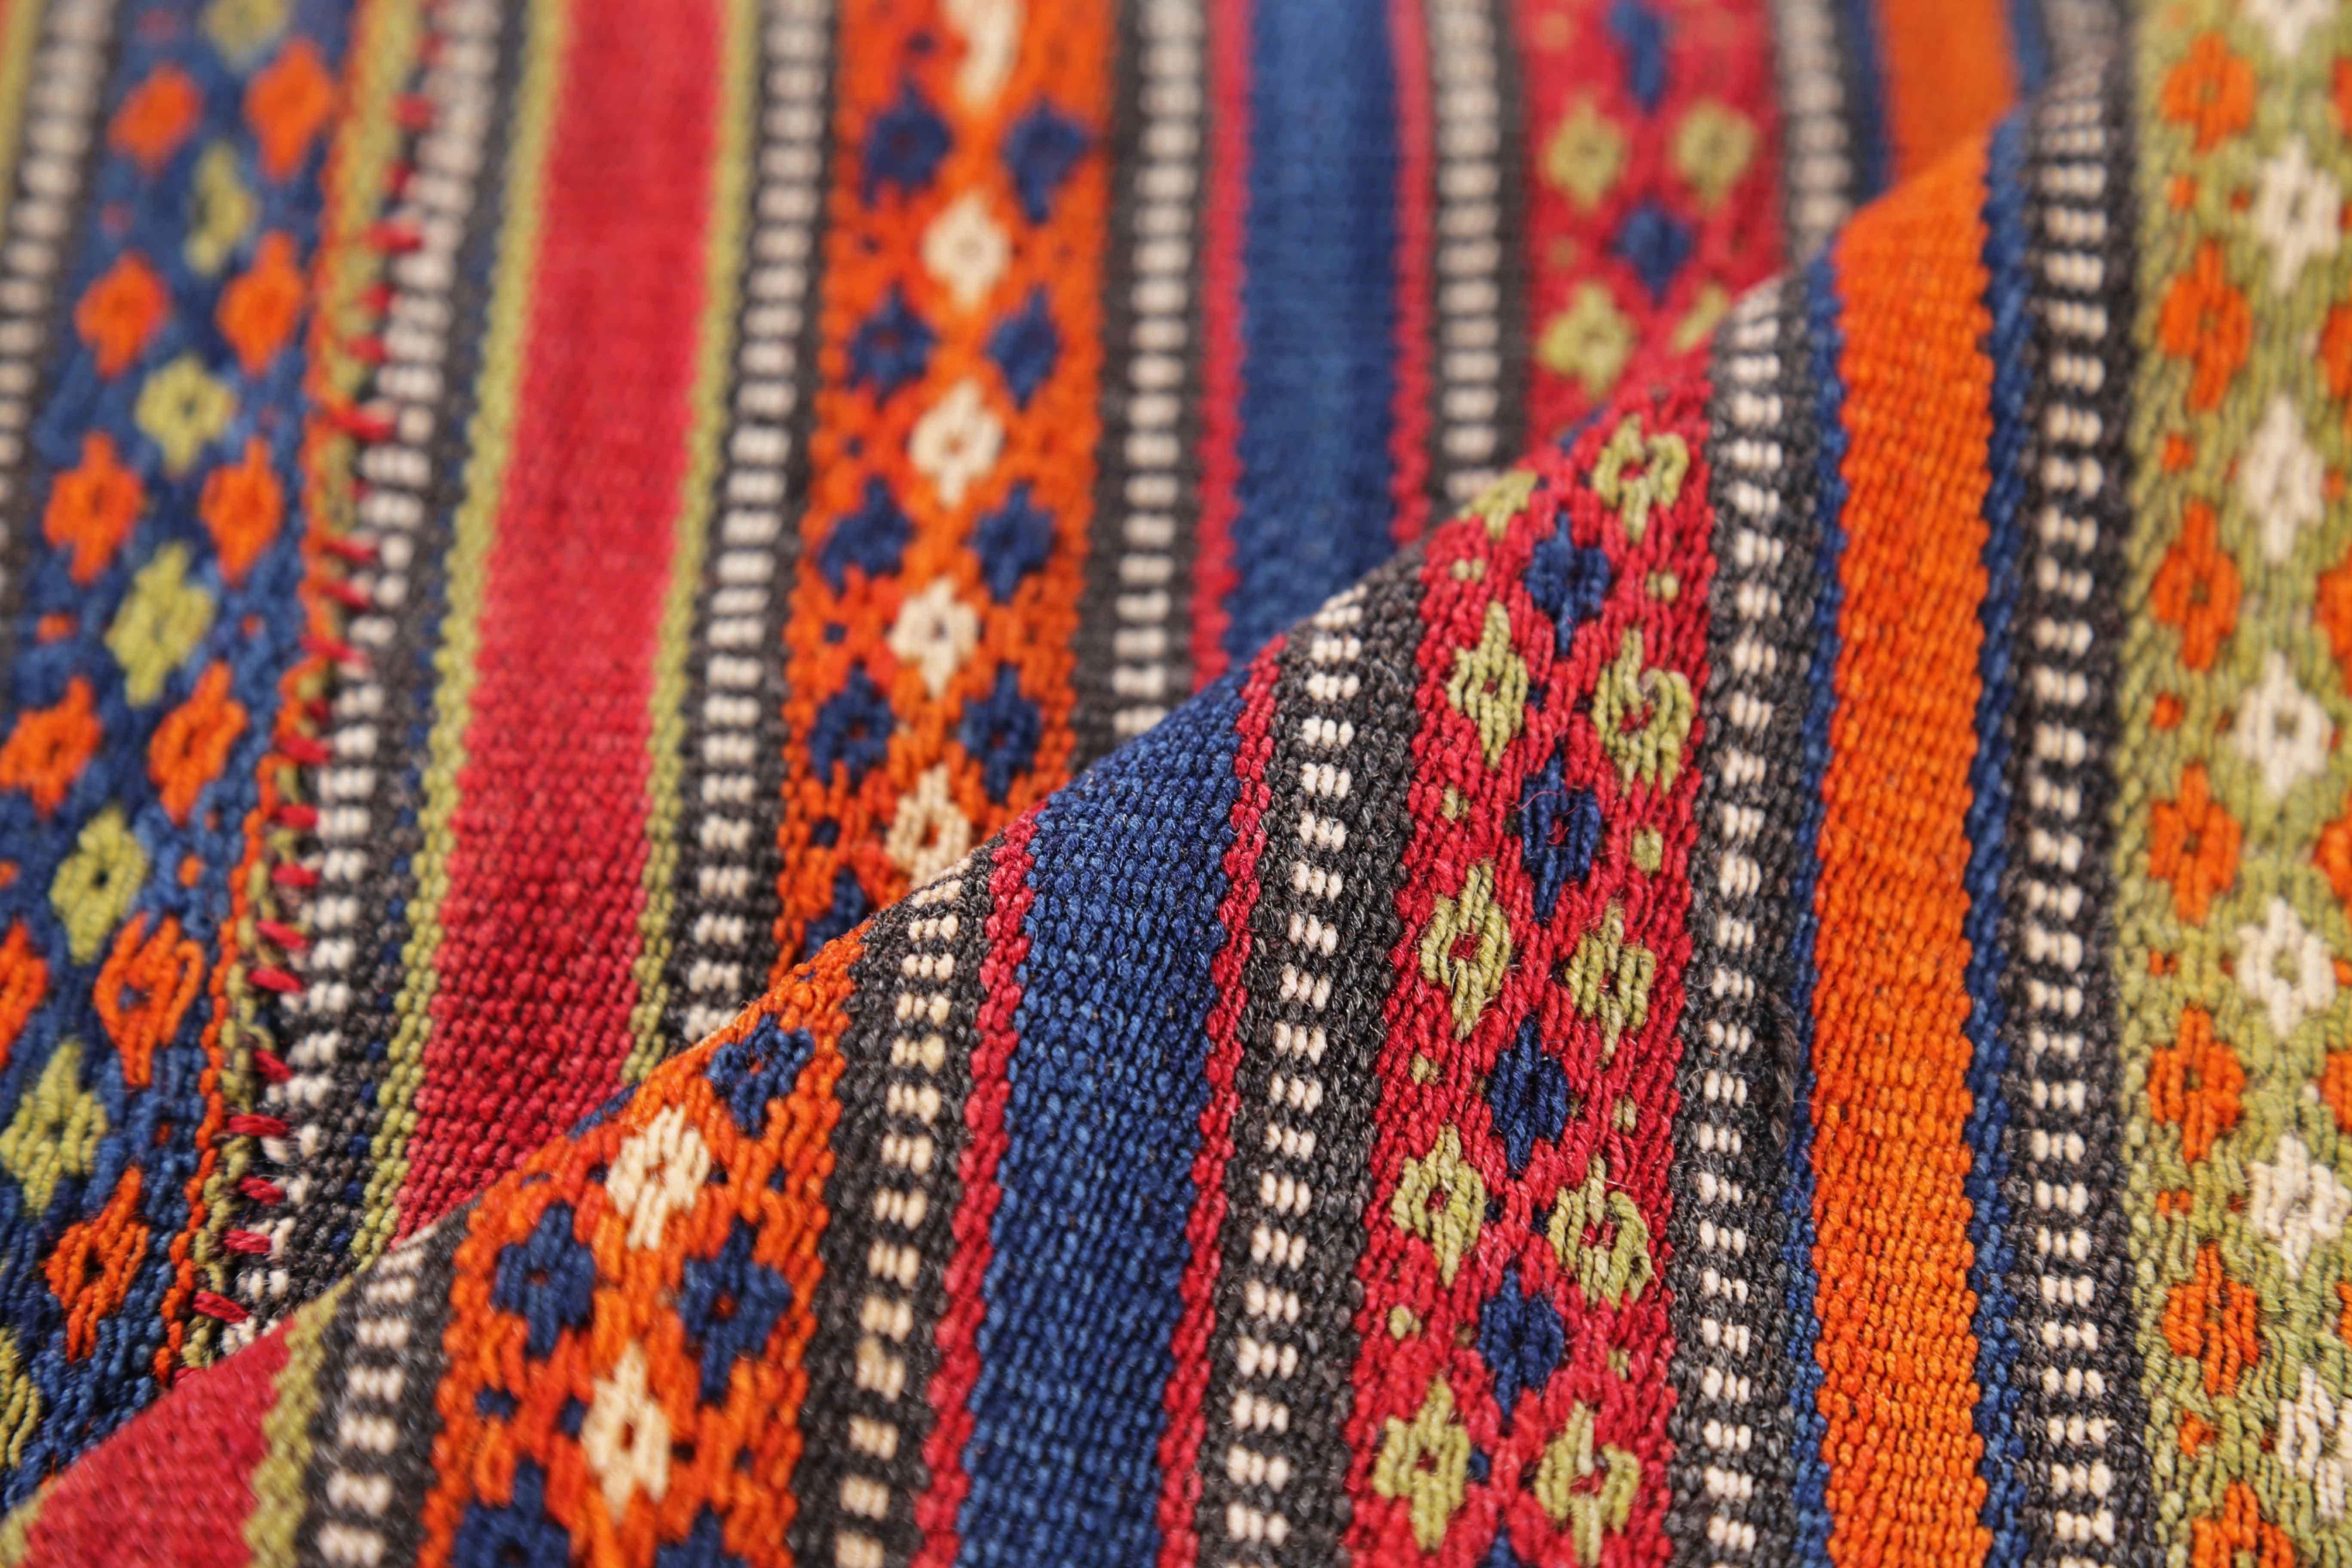 Hand-Woven Antique Persian Square Rug Jajim Design For Sale